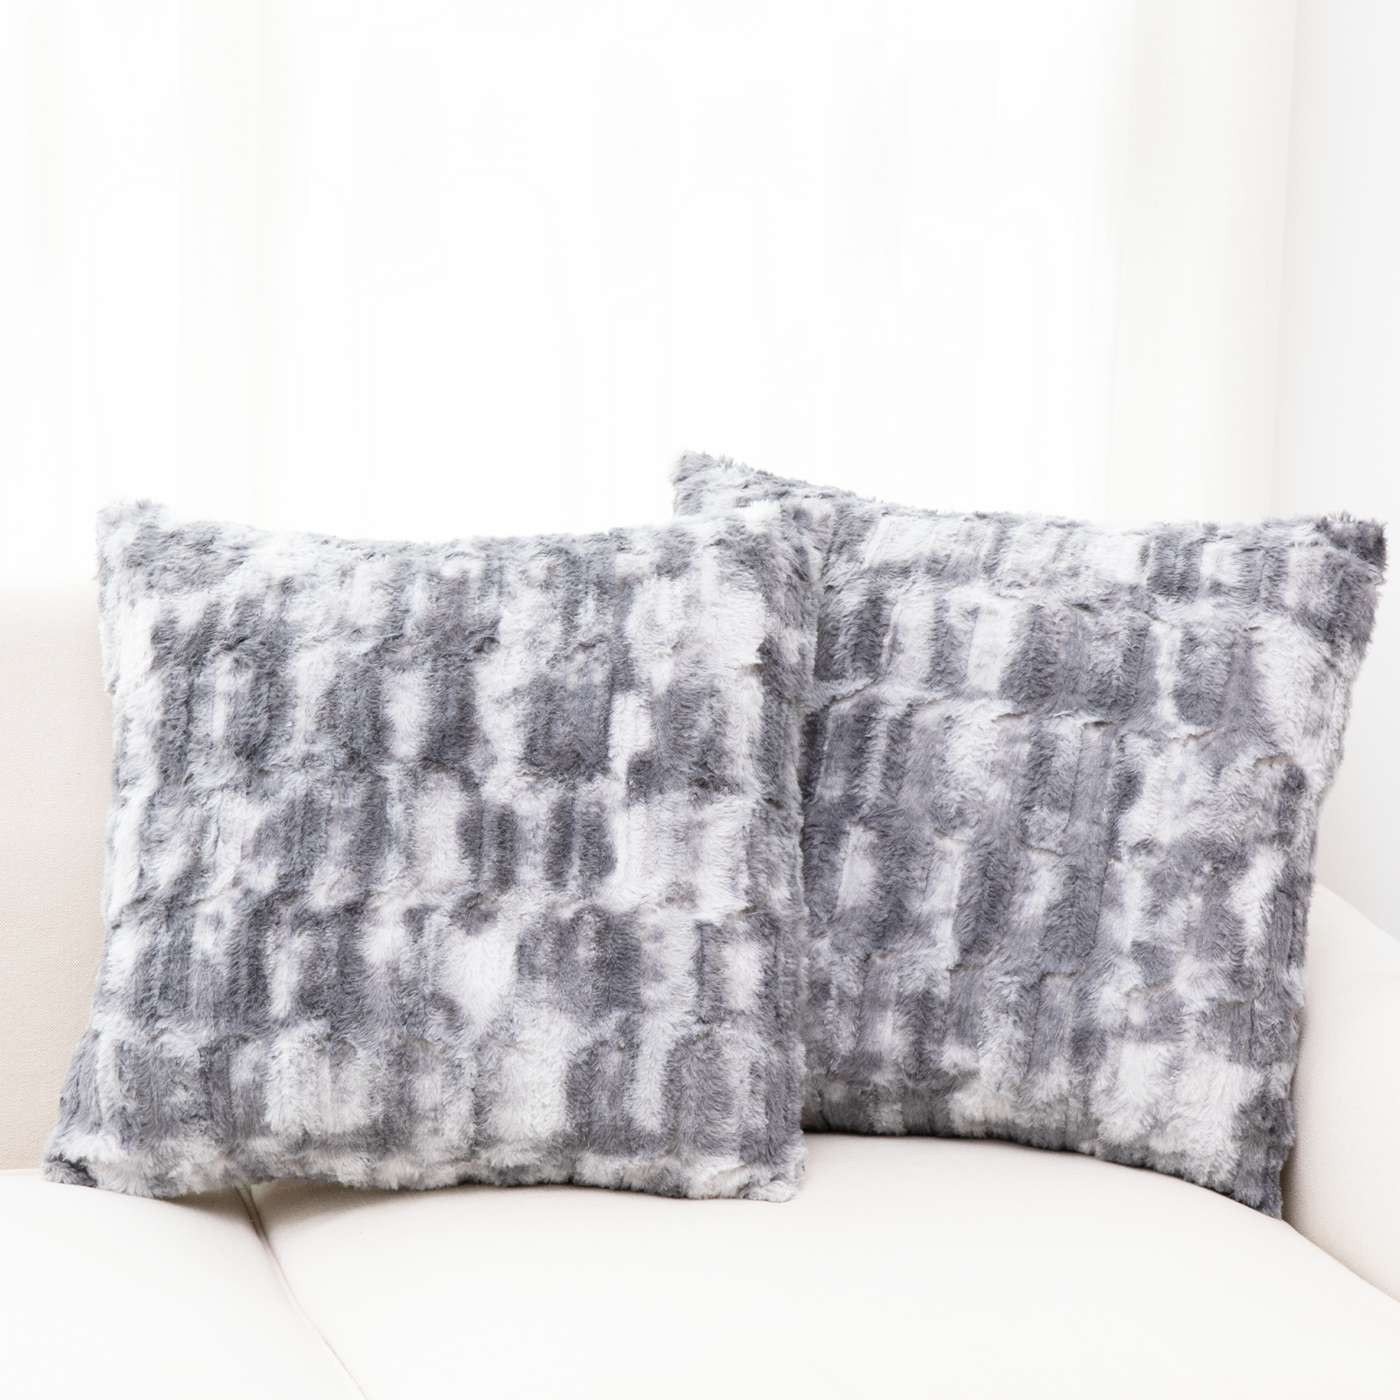  Cheer Collection Faux Fur Pillows - Decorative Throw